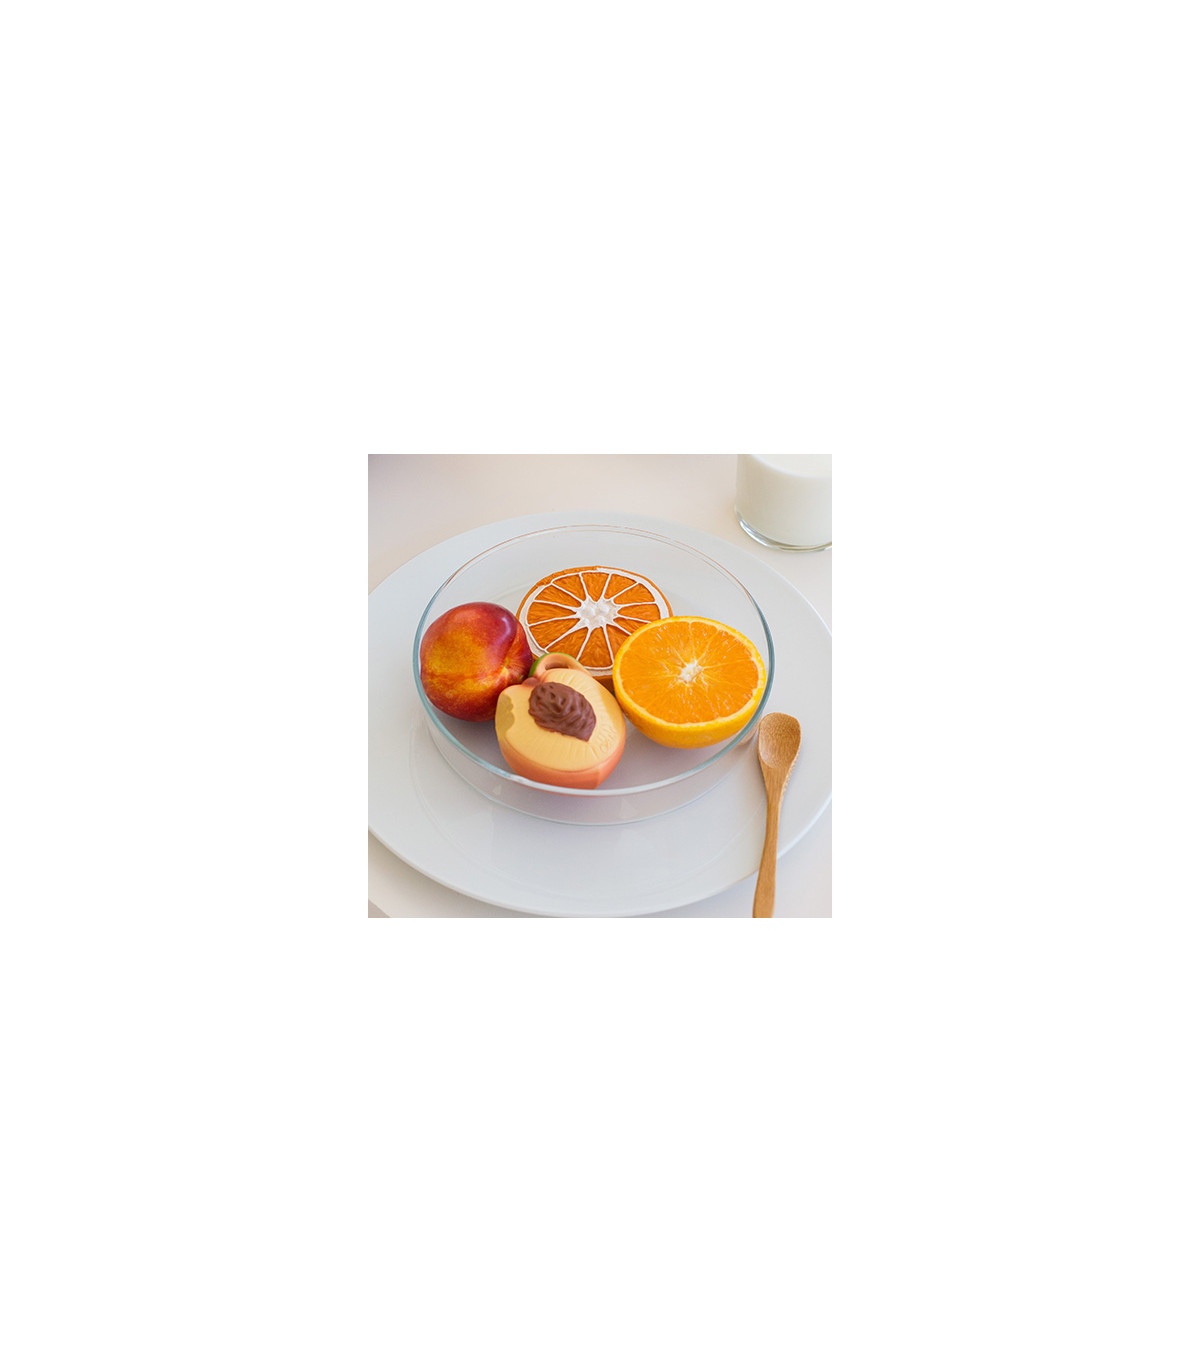 Greifling Beißring braun/orange Pfirsichhälfte Oli & Carol